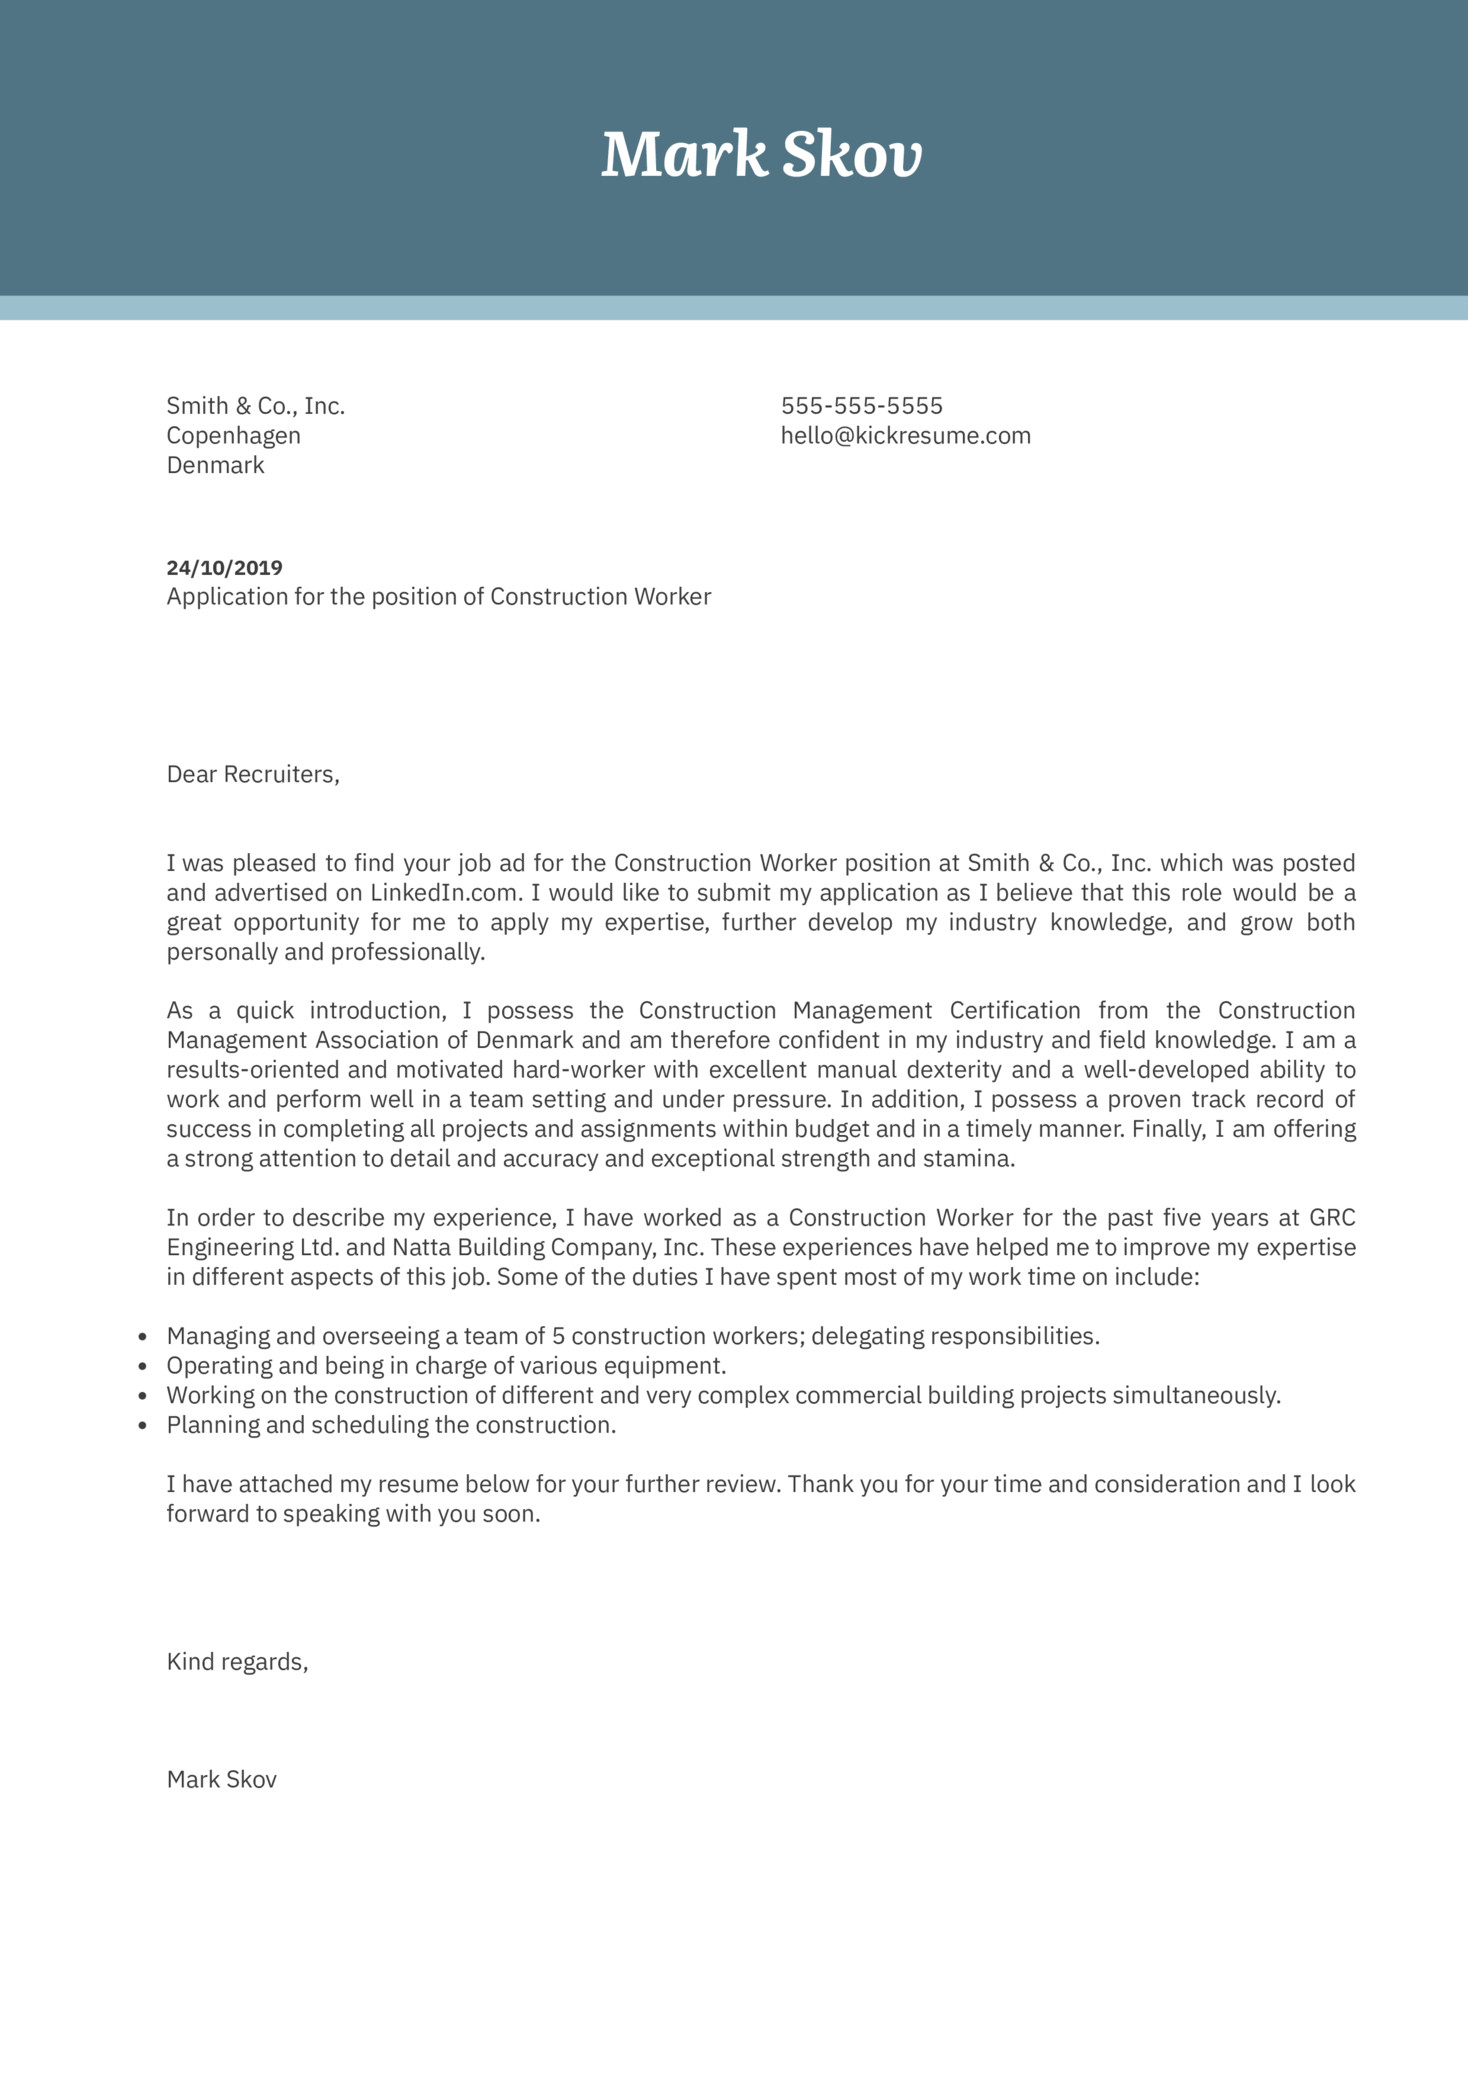 Sample Cover Letter for Construction Resume Construction Worker Cover Letter Example